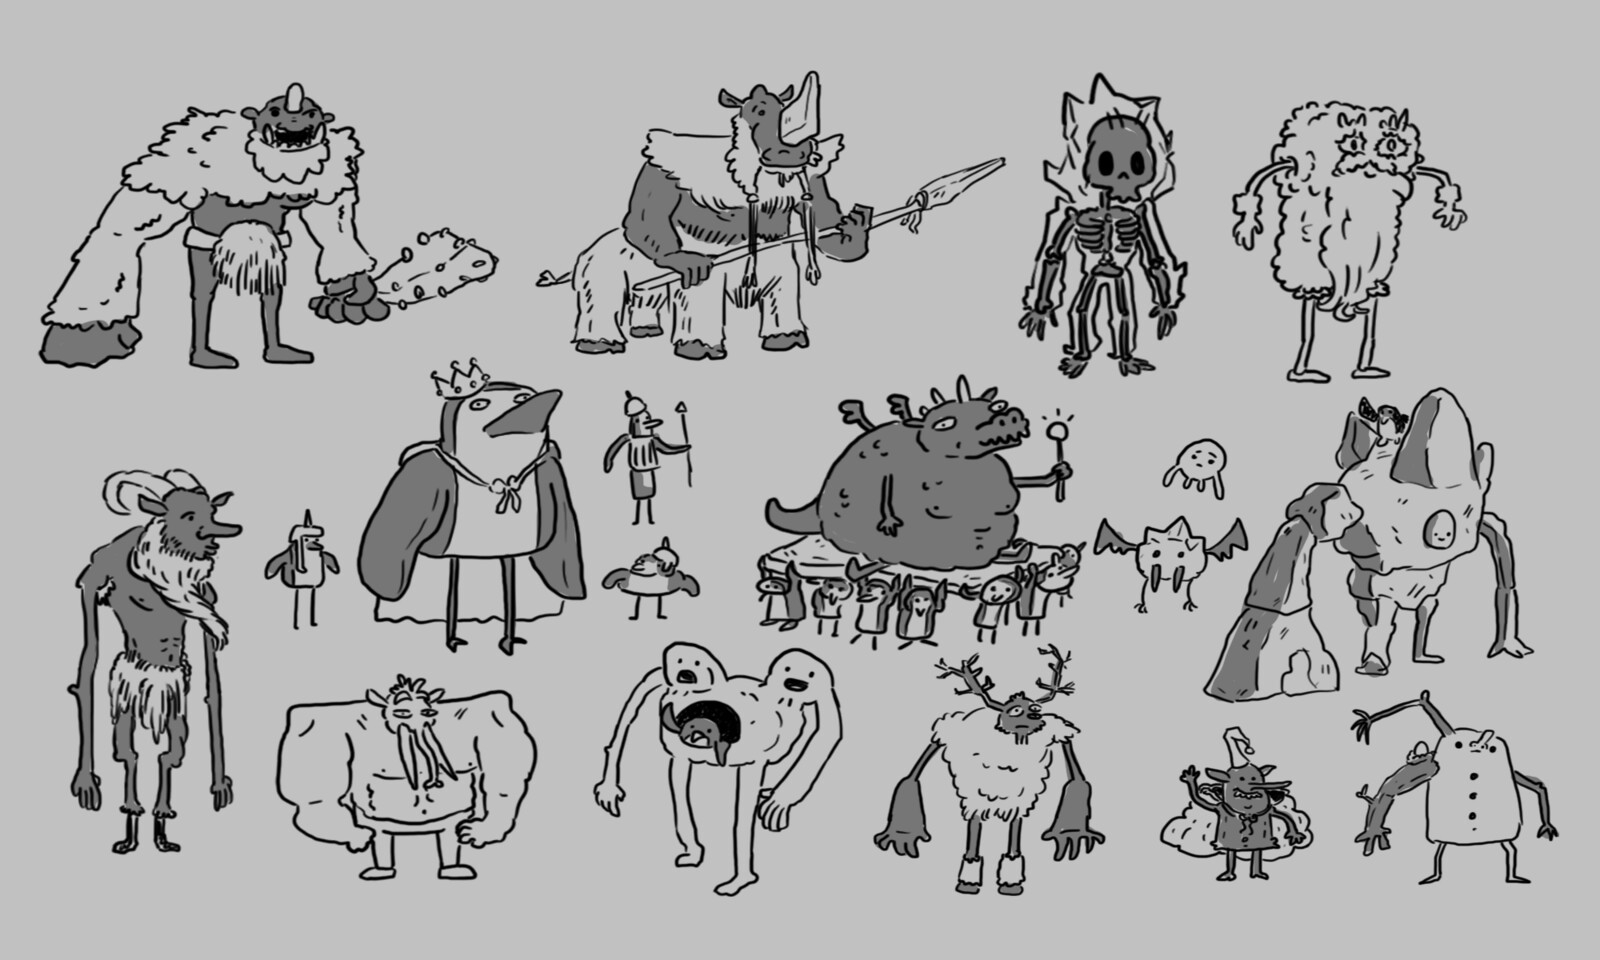 character sketchs
